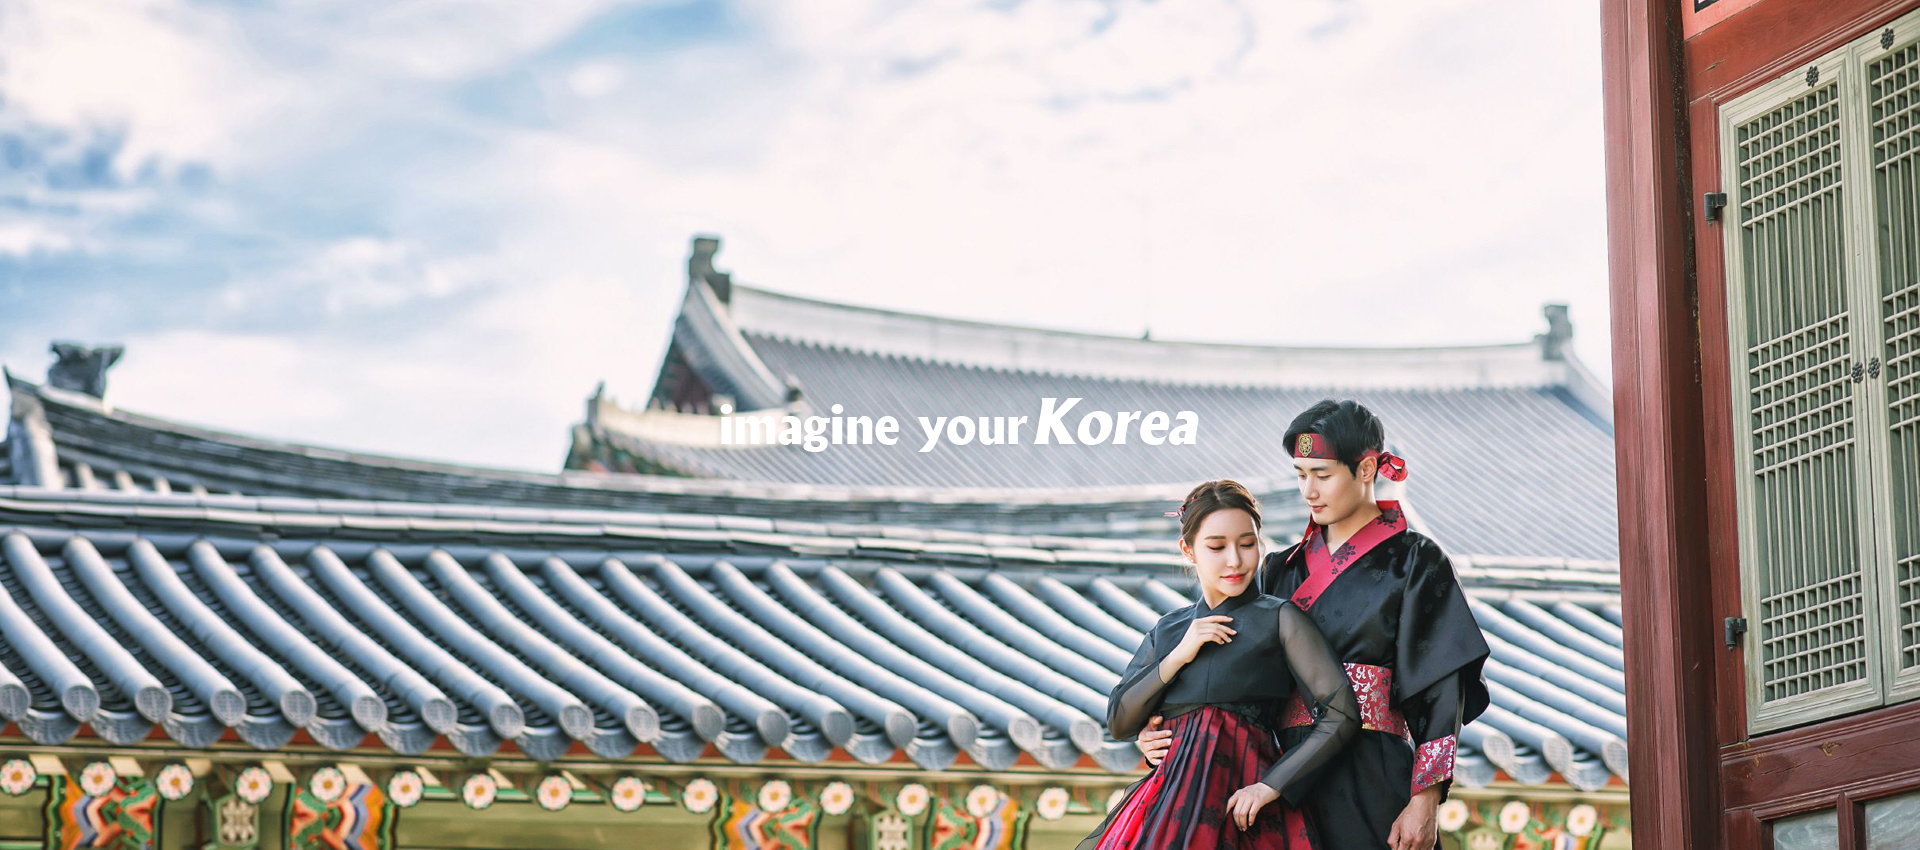 imagine your Korea